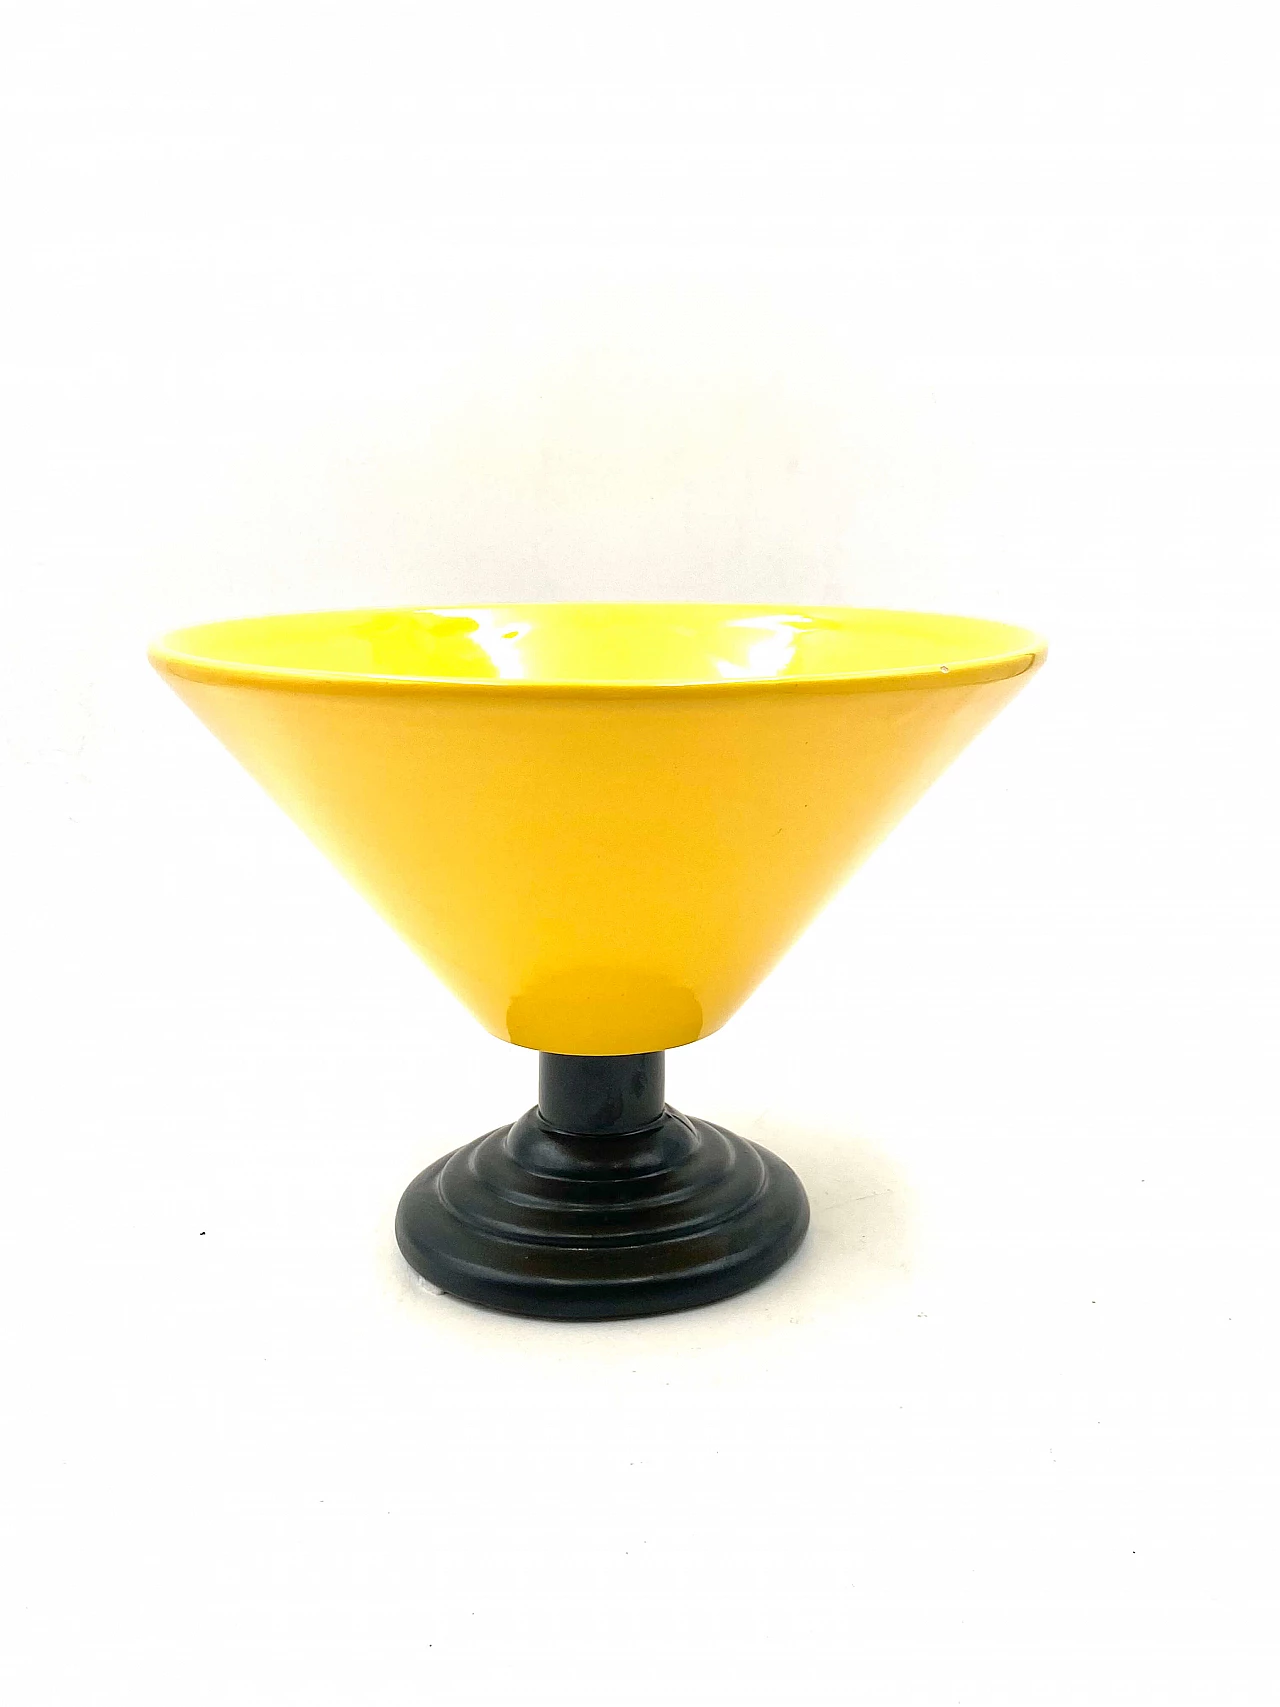 Postmodern yellow vase in Memphis style, 1980s 1380451